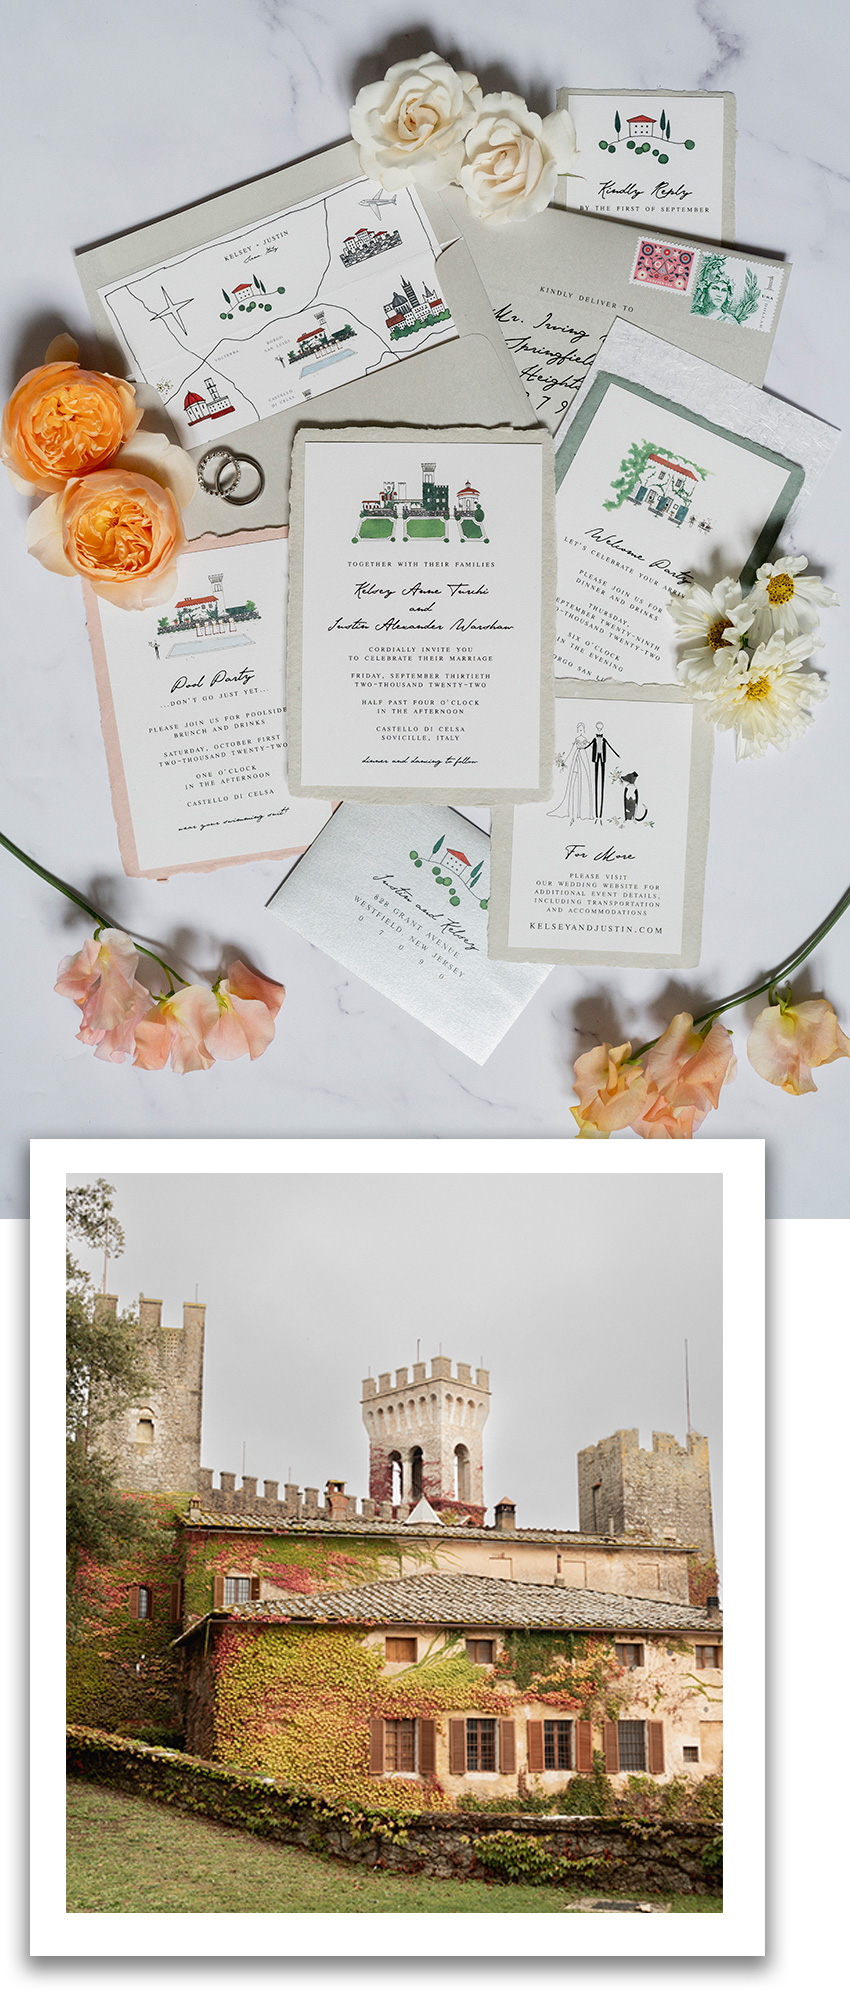 Castello di Celsa wedding venue and wedding stationery